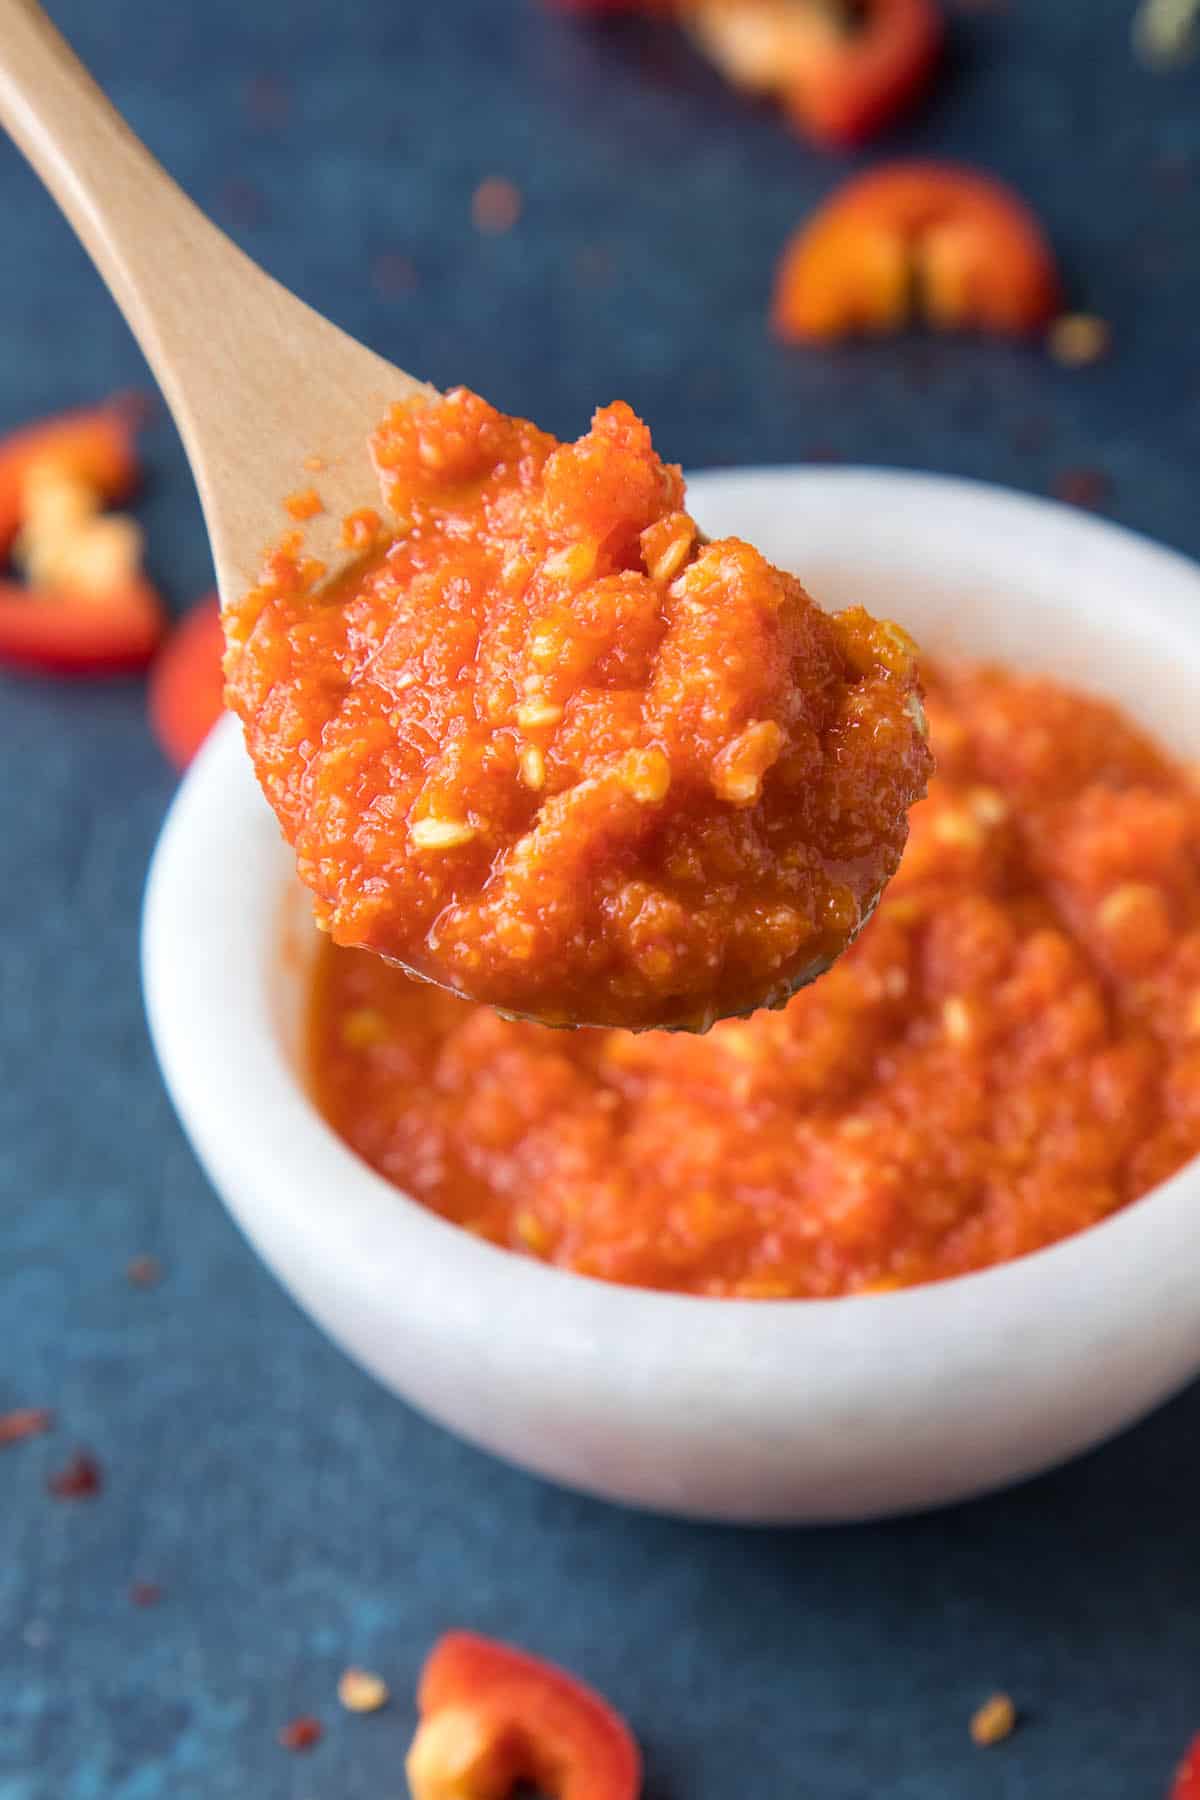 Homemade Chili-Garlic Sauce – On a Spoon